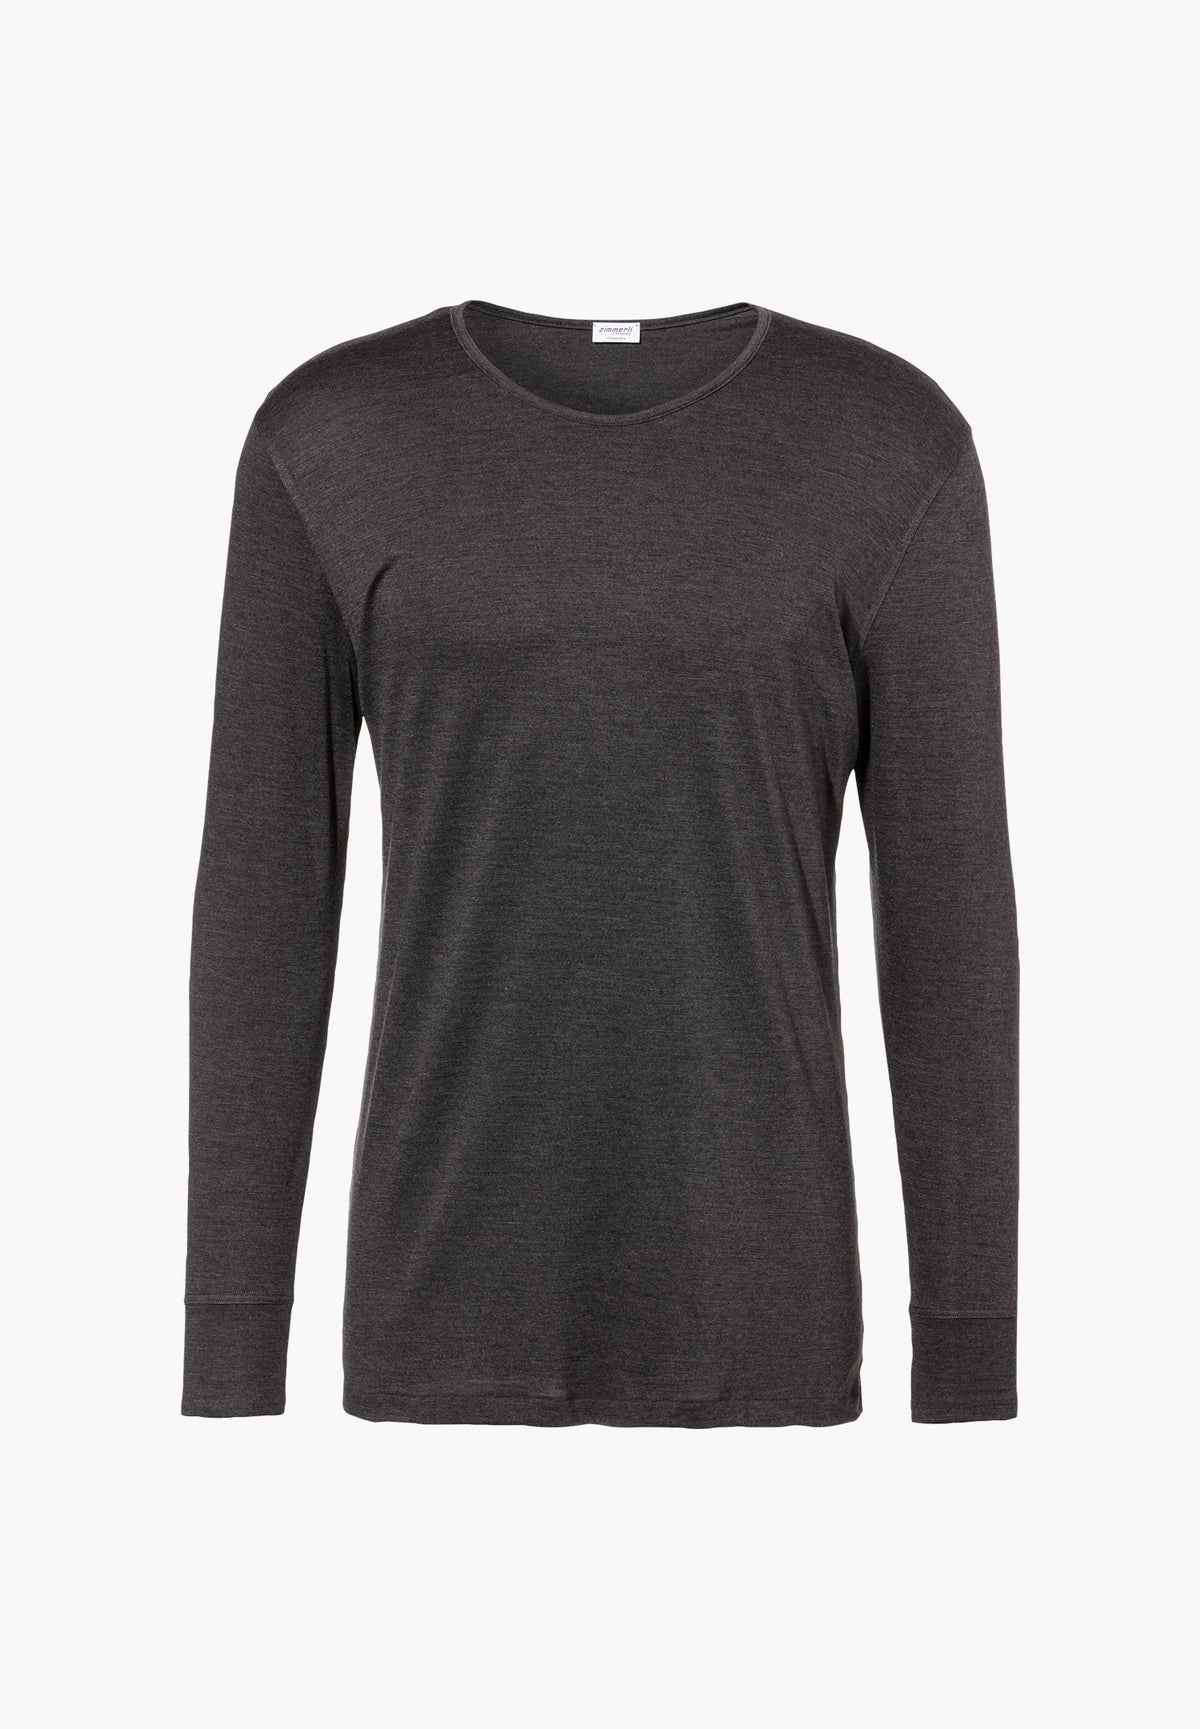 Wool &amp; Silk | T-Shirt langarm - charcoal